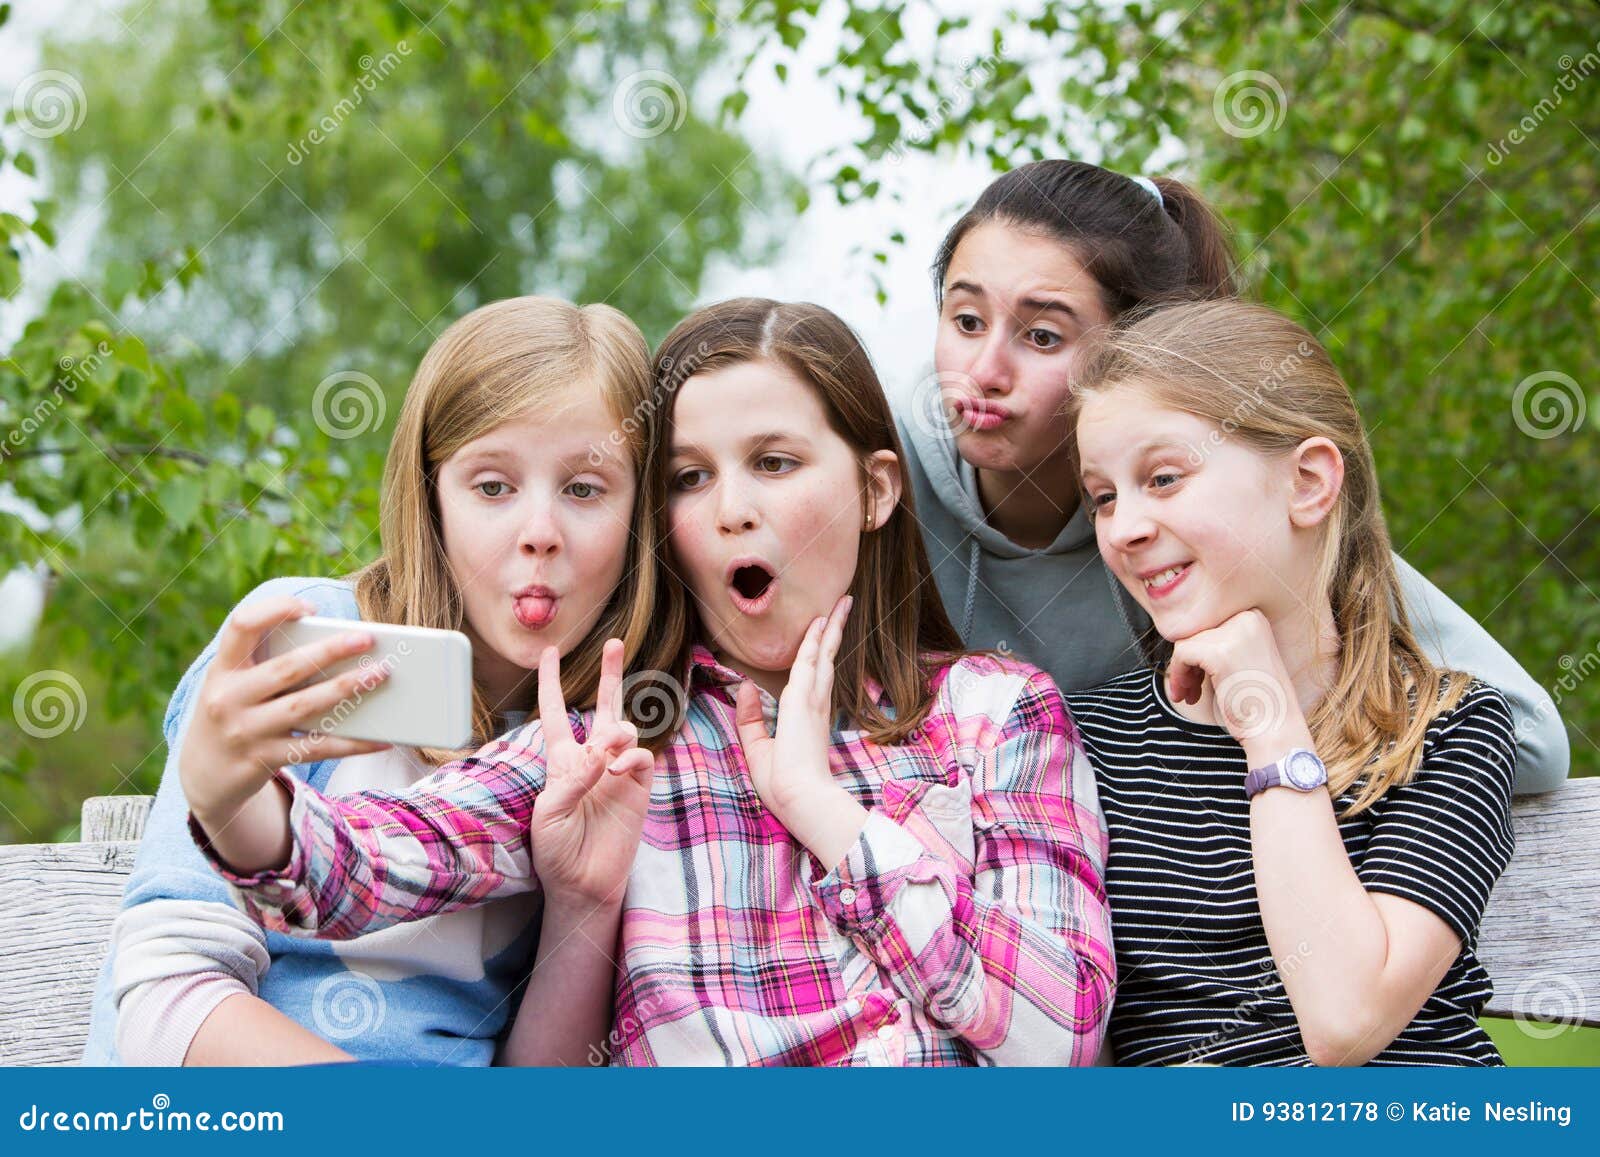 selfie poses for insta girls｜TikTok Search